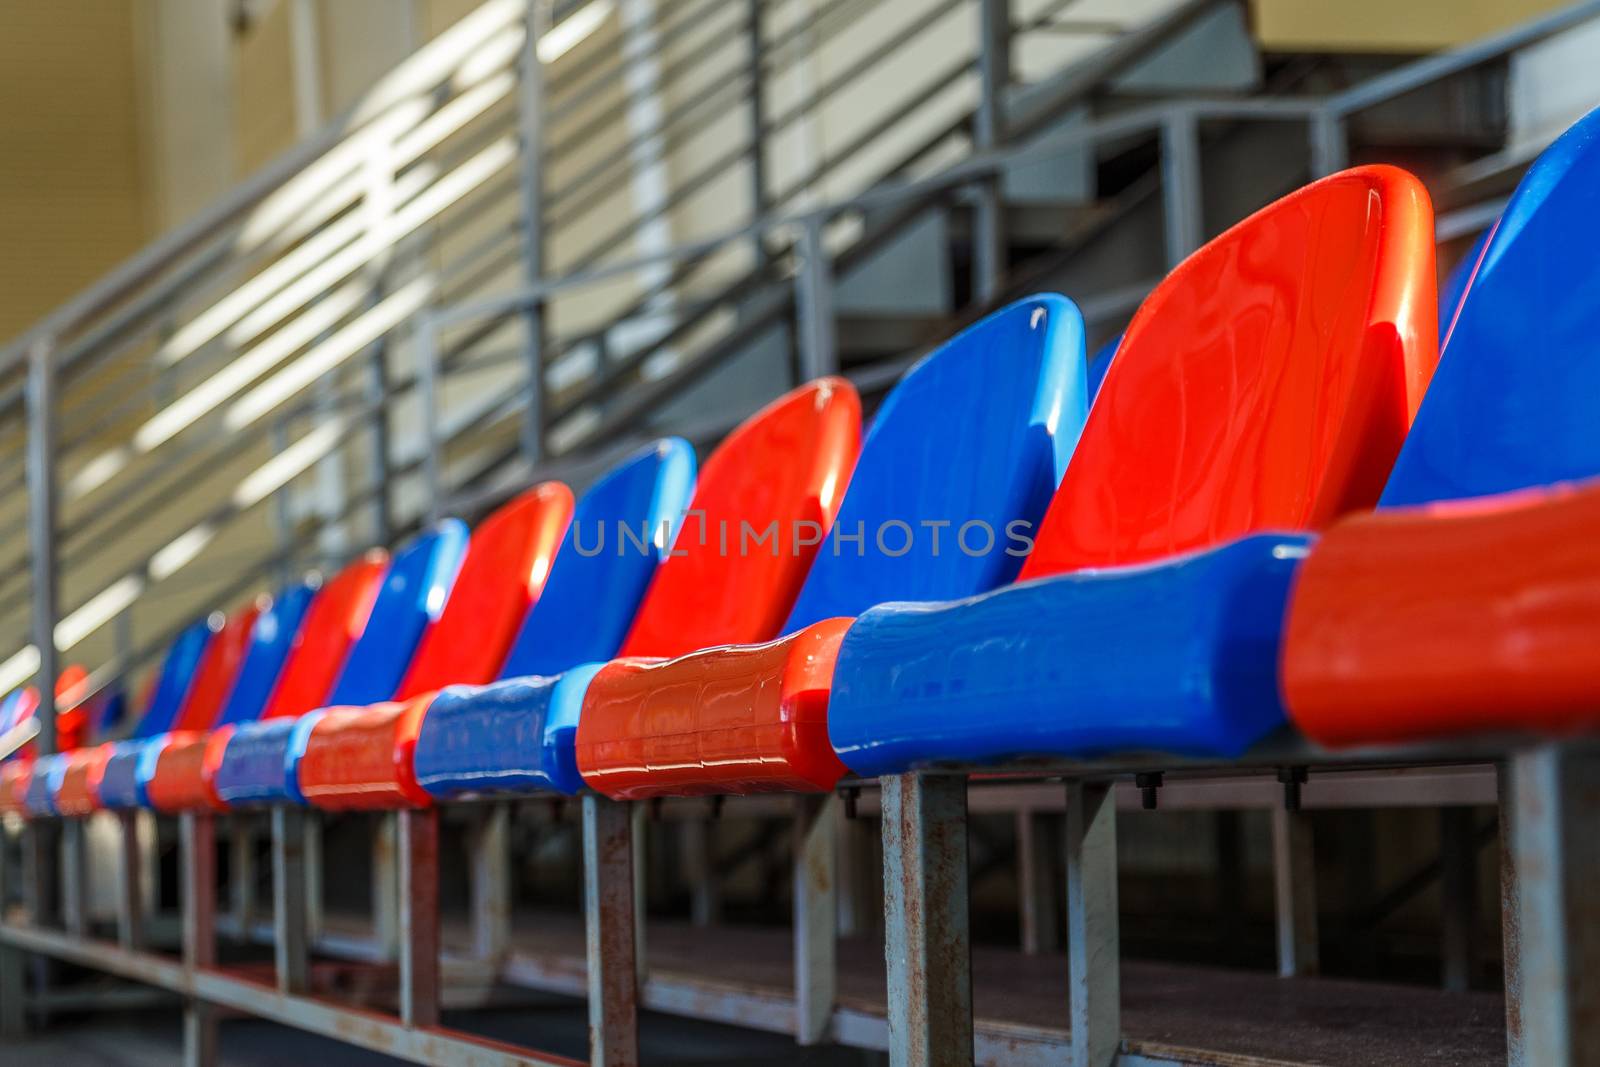 multi-colored plastic seats on the podium in the sports complex